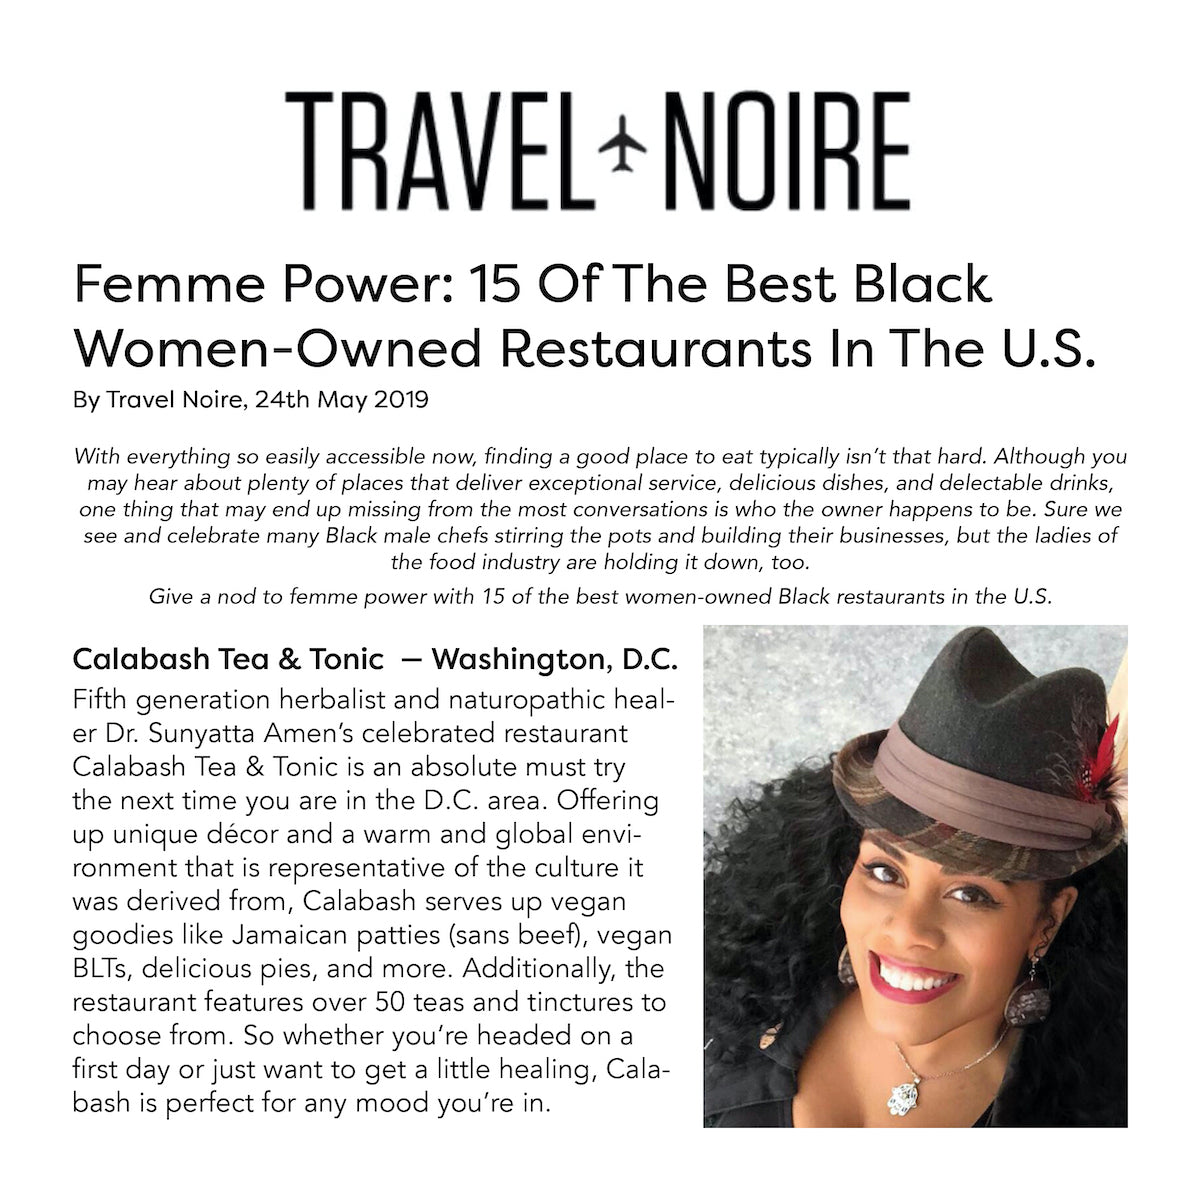 Travel Noire - Femme Power: 15 of the Best Black Women-Owned Restaurants in the US